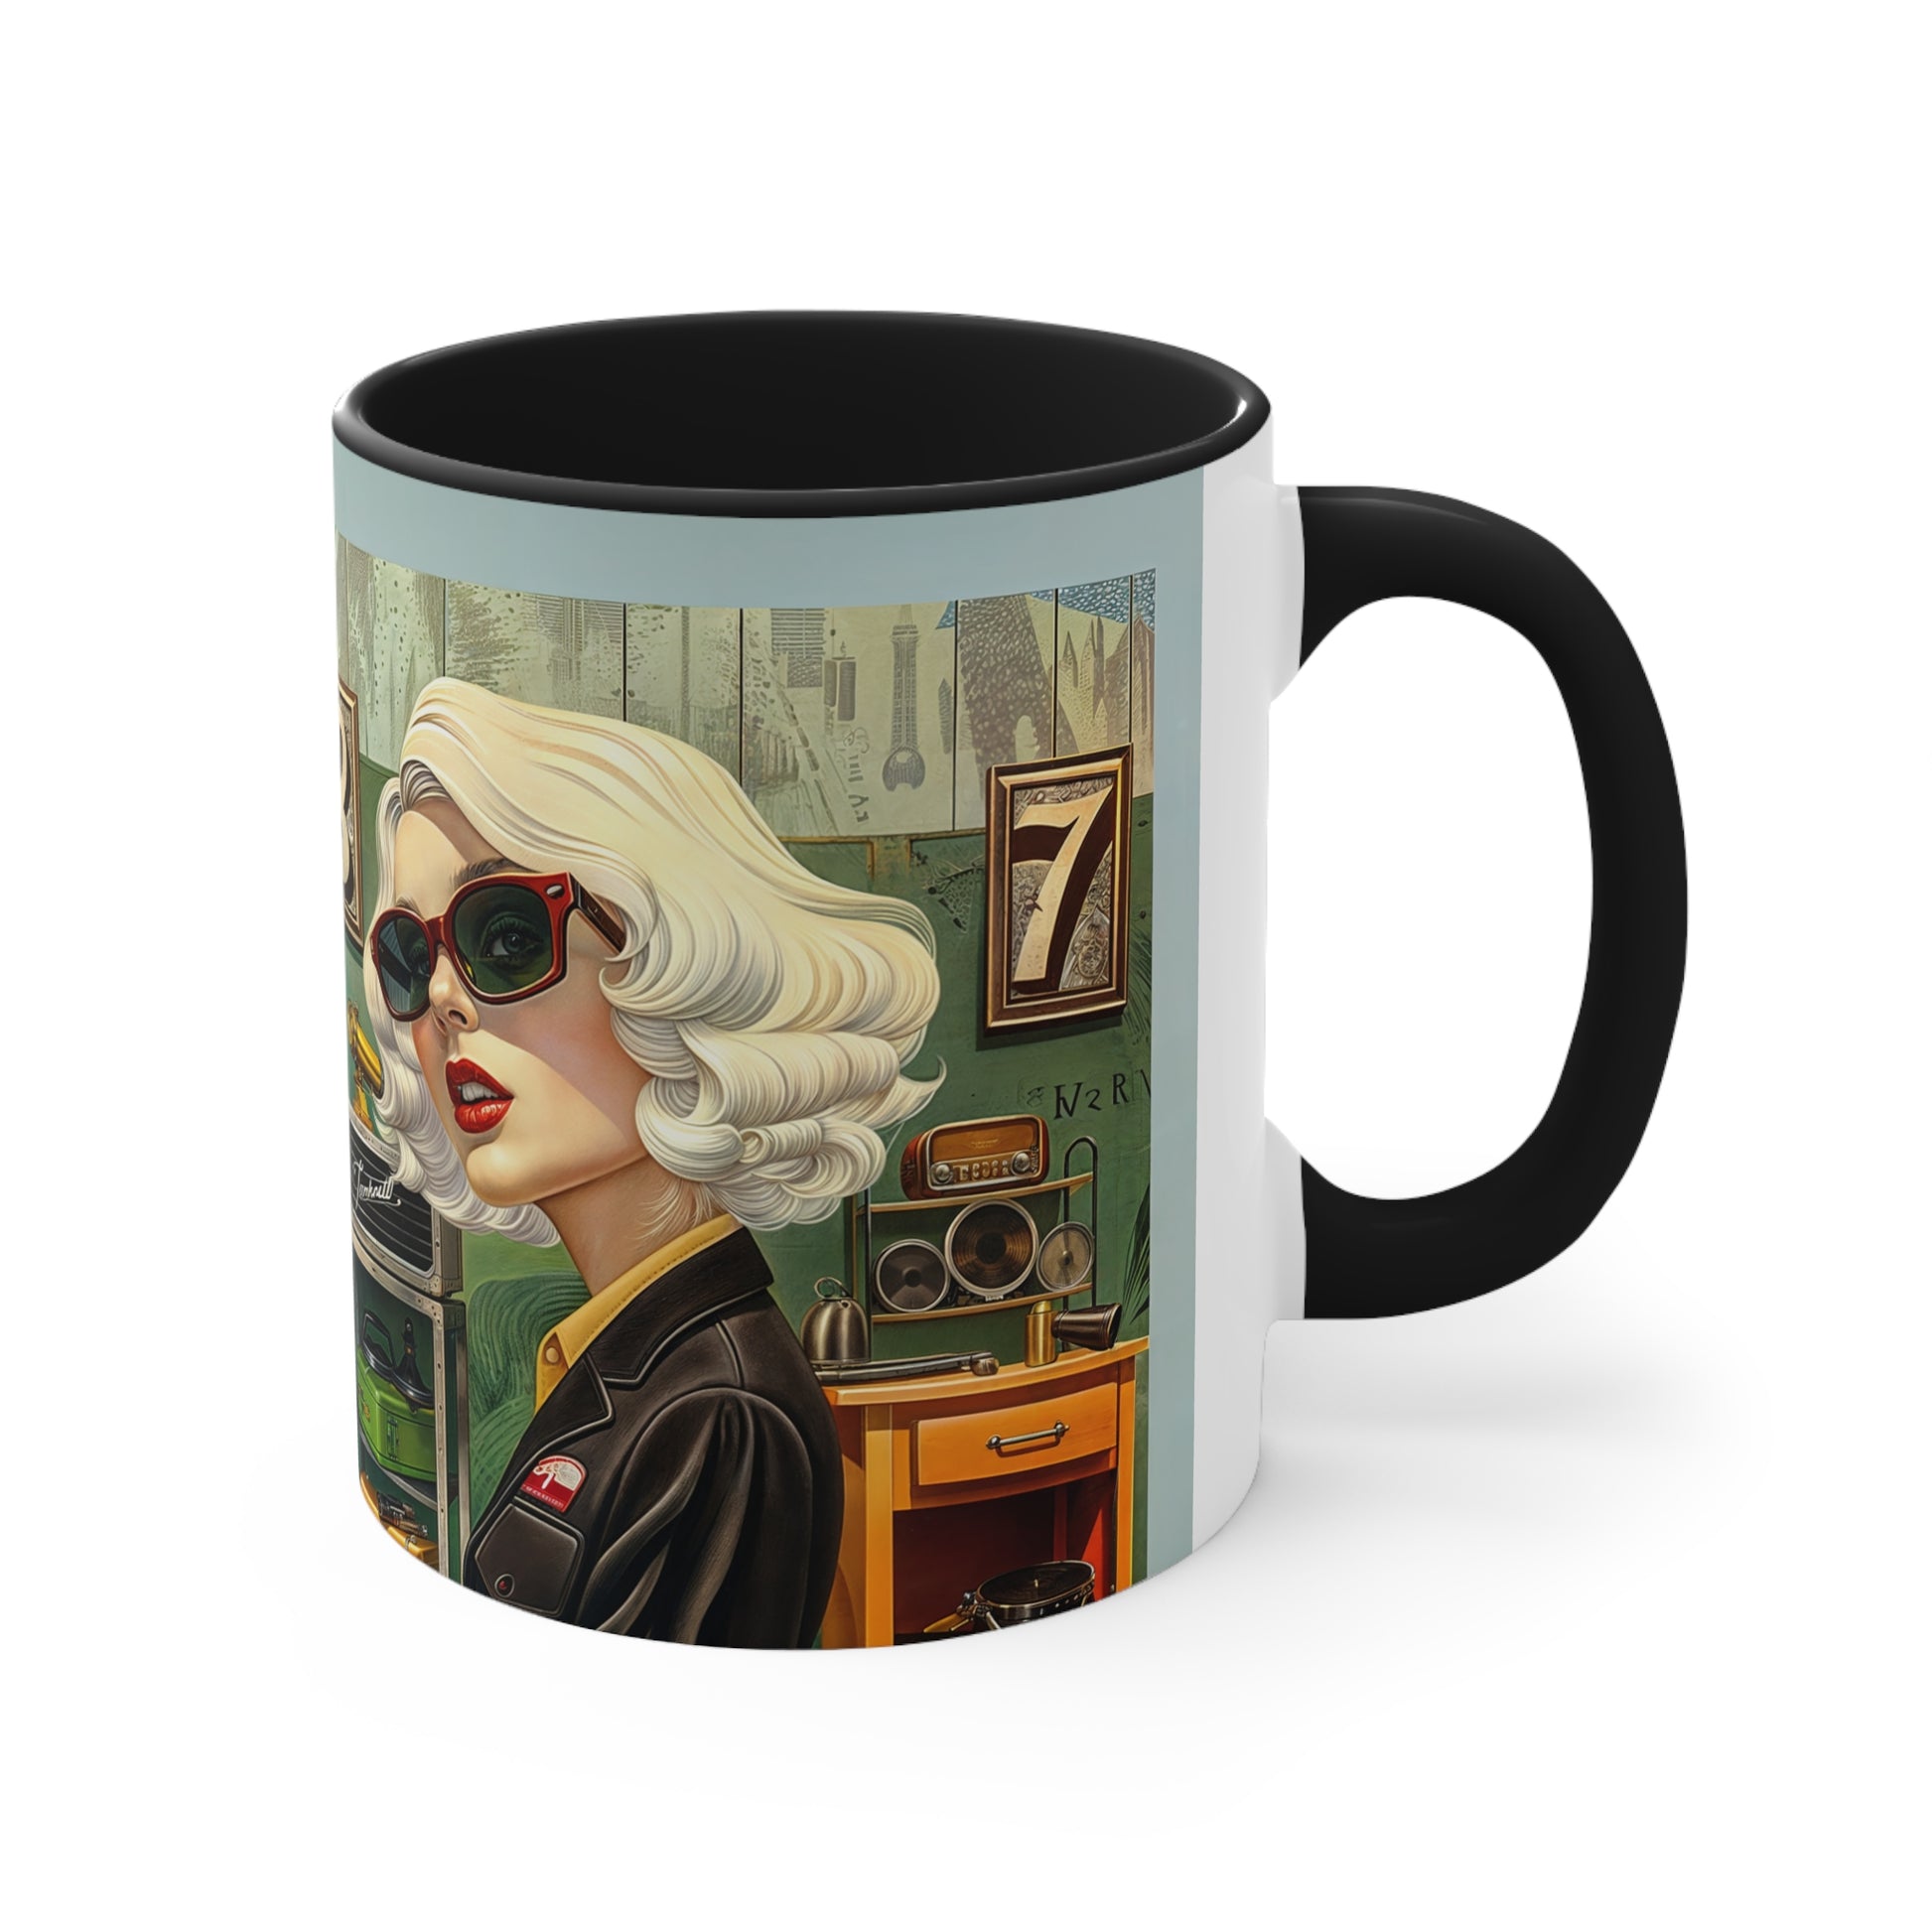 Accent Coffee Mug, 11oz - Tool Time Blonde side black